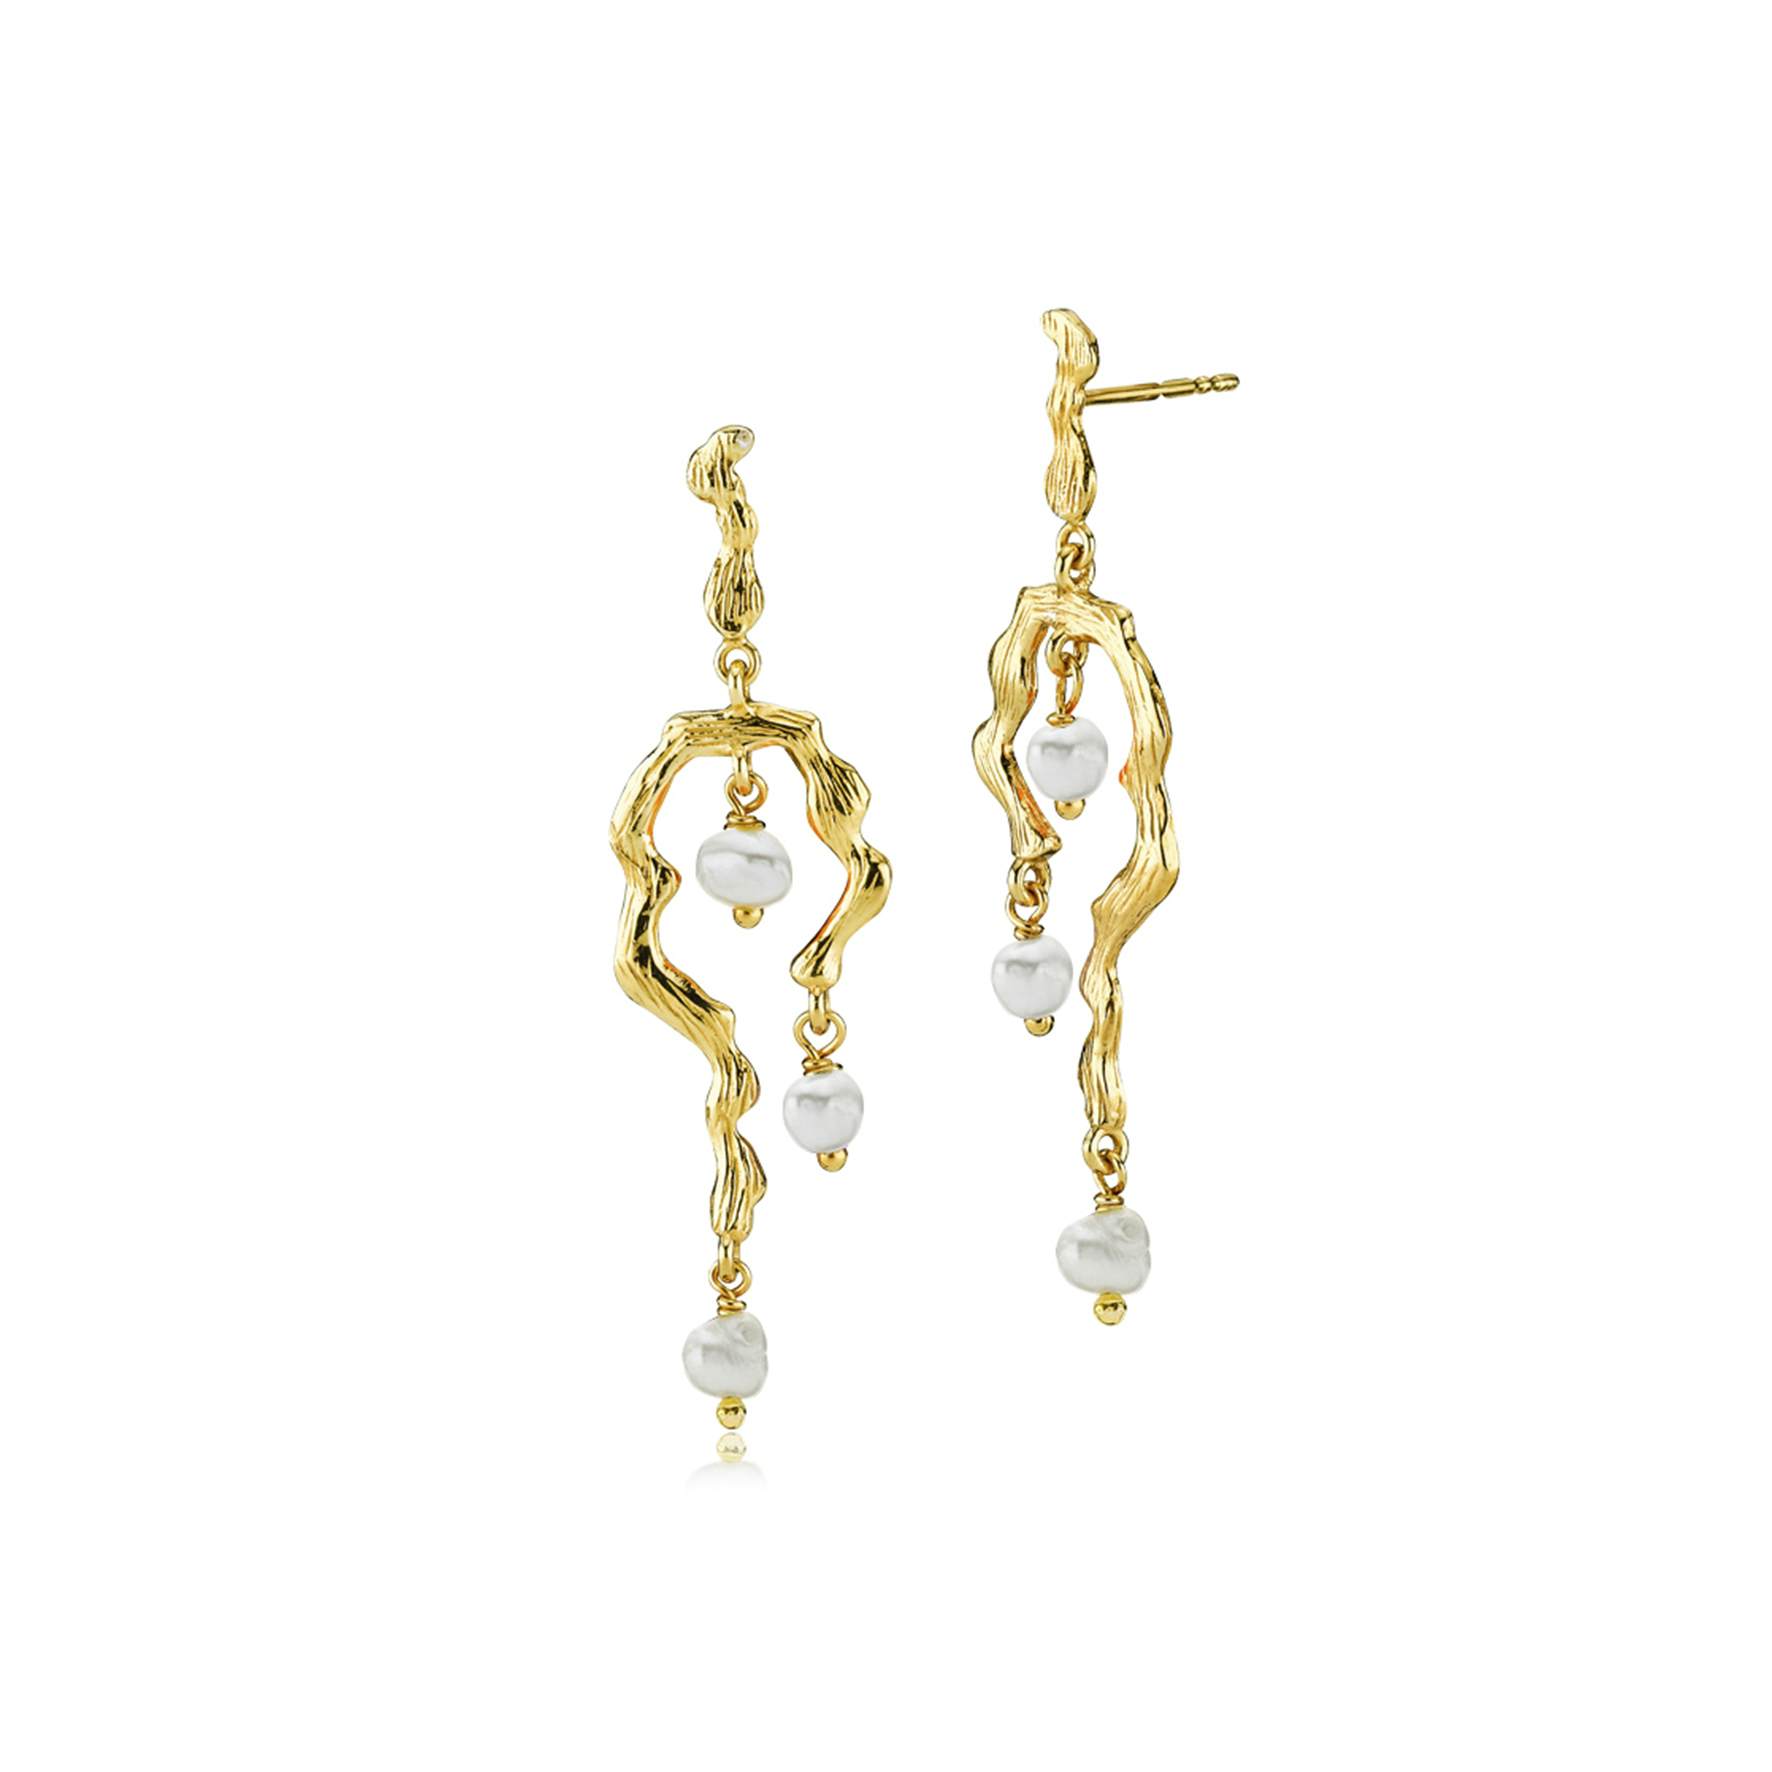 Lærke Bentsen By Sistie Long Earrings With Pearls från Sistie i Förgyllt-Silver Sterling 925|Freshwater Pearl